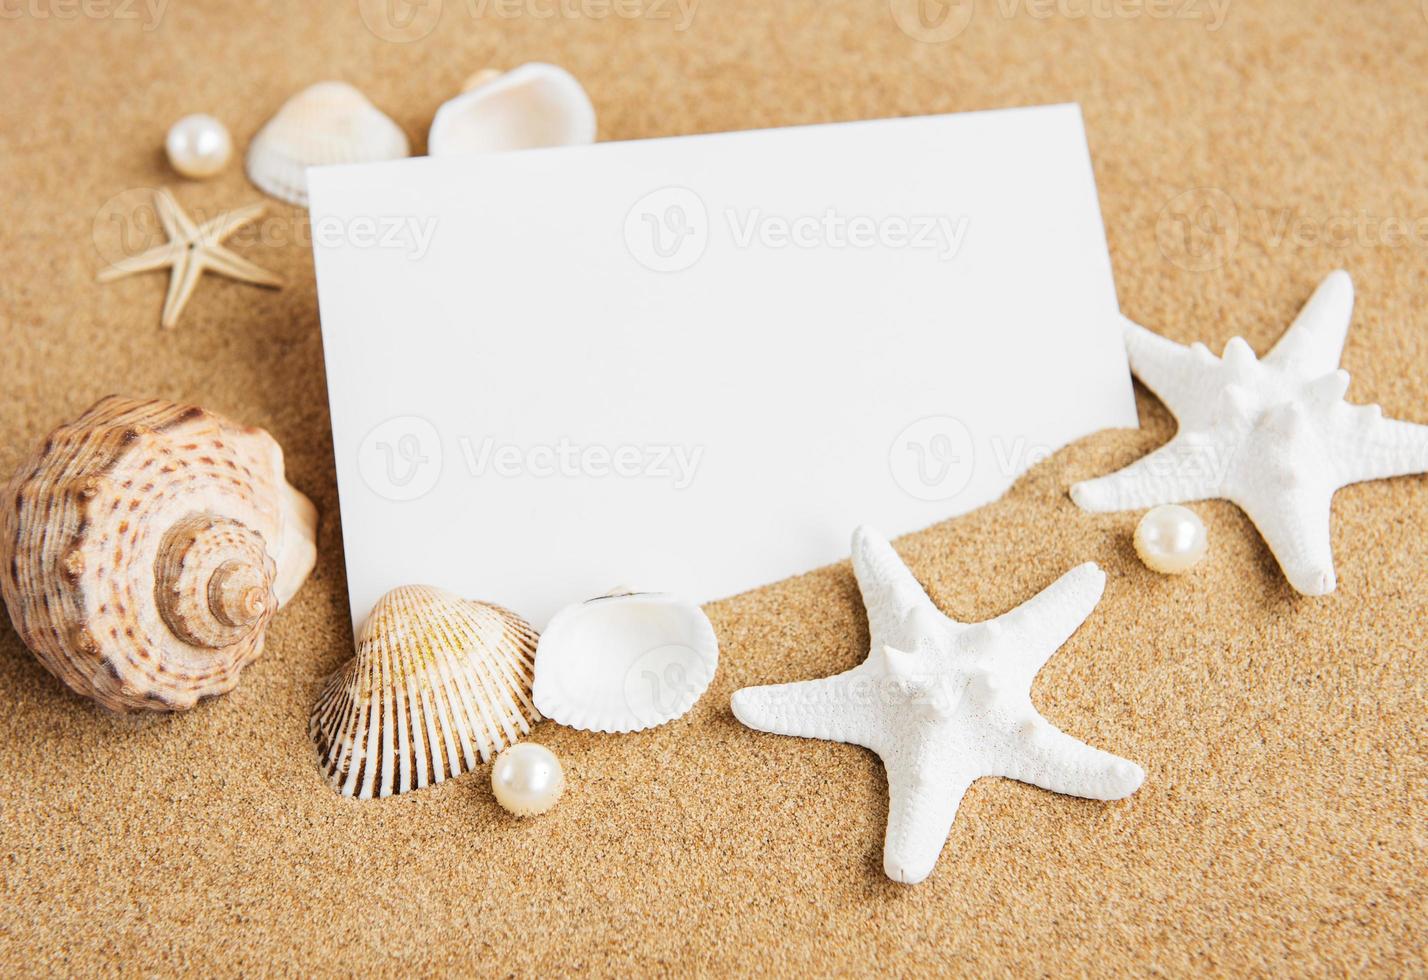 conchiglie, stelle marine e una cartolina vuota foto